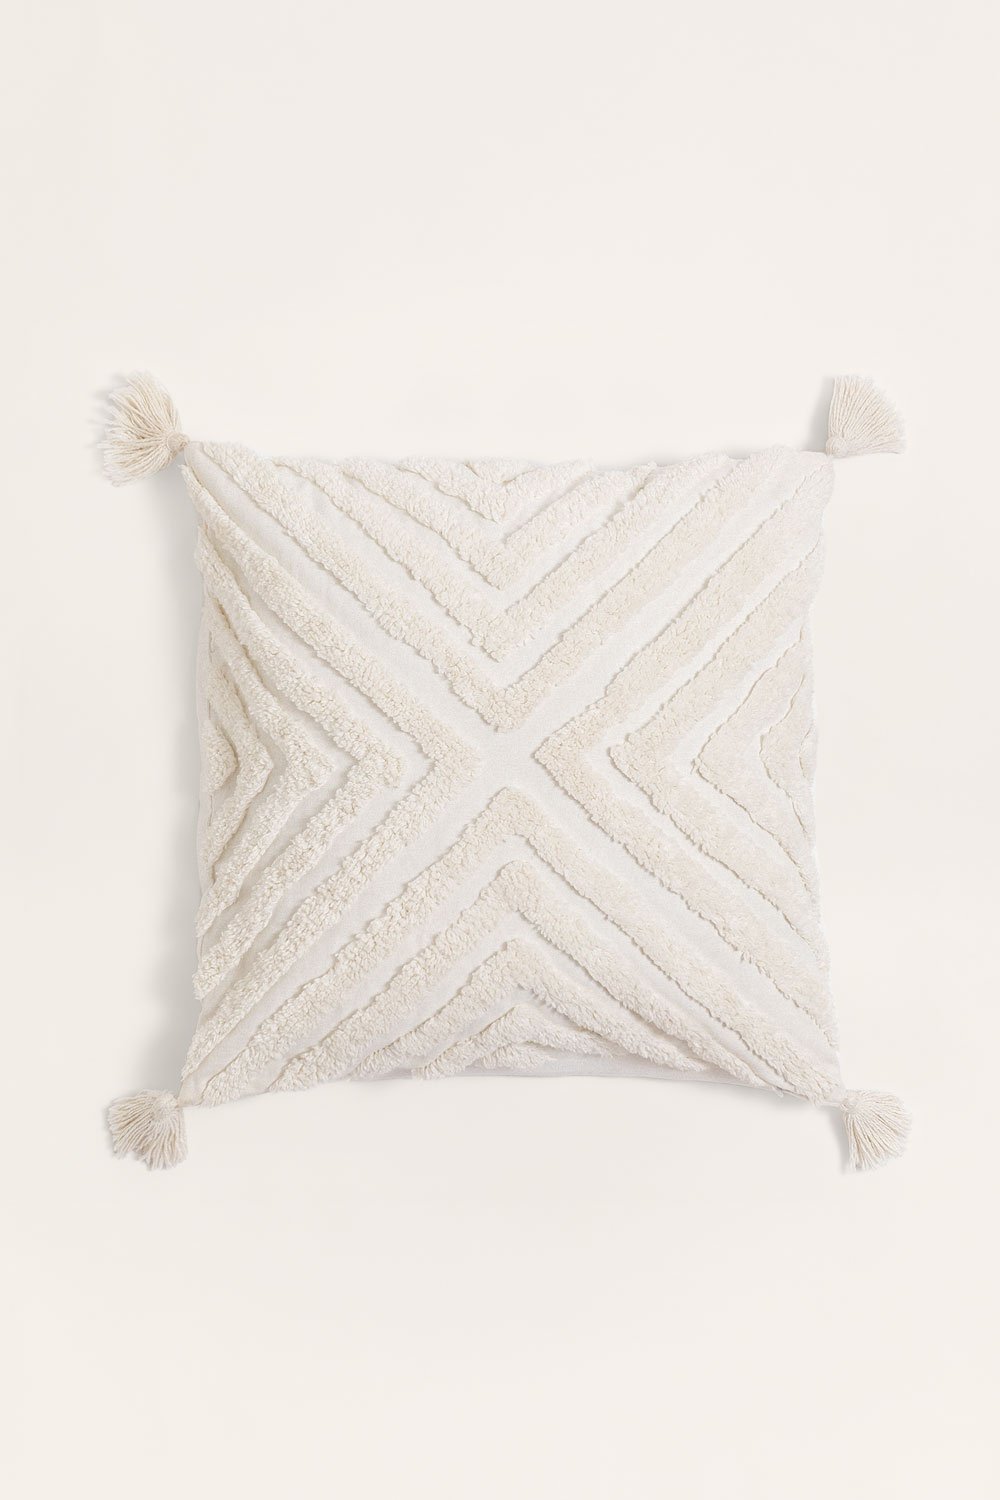 Square Cotton Cushion (45 x 45 cm) Reik, gallery image 1